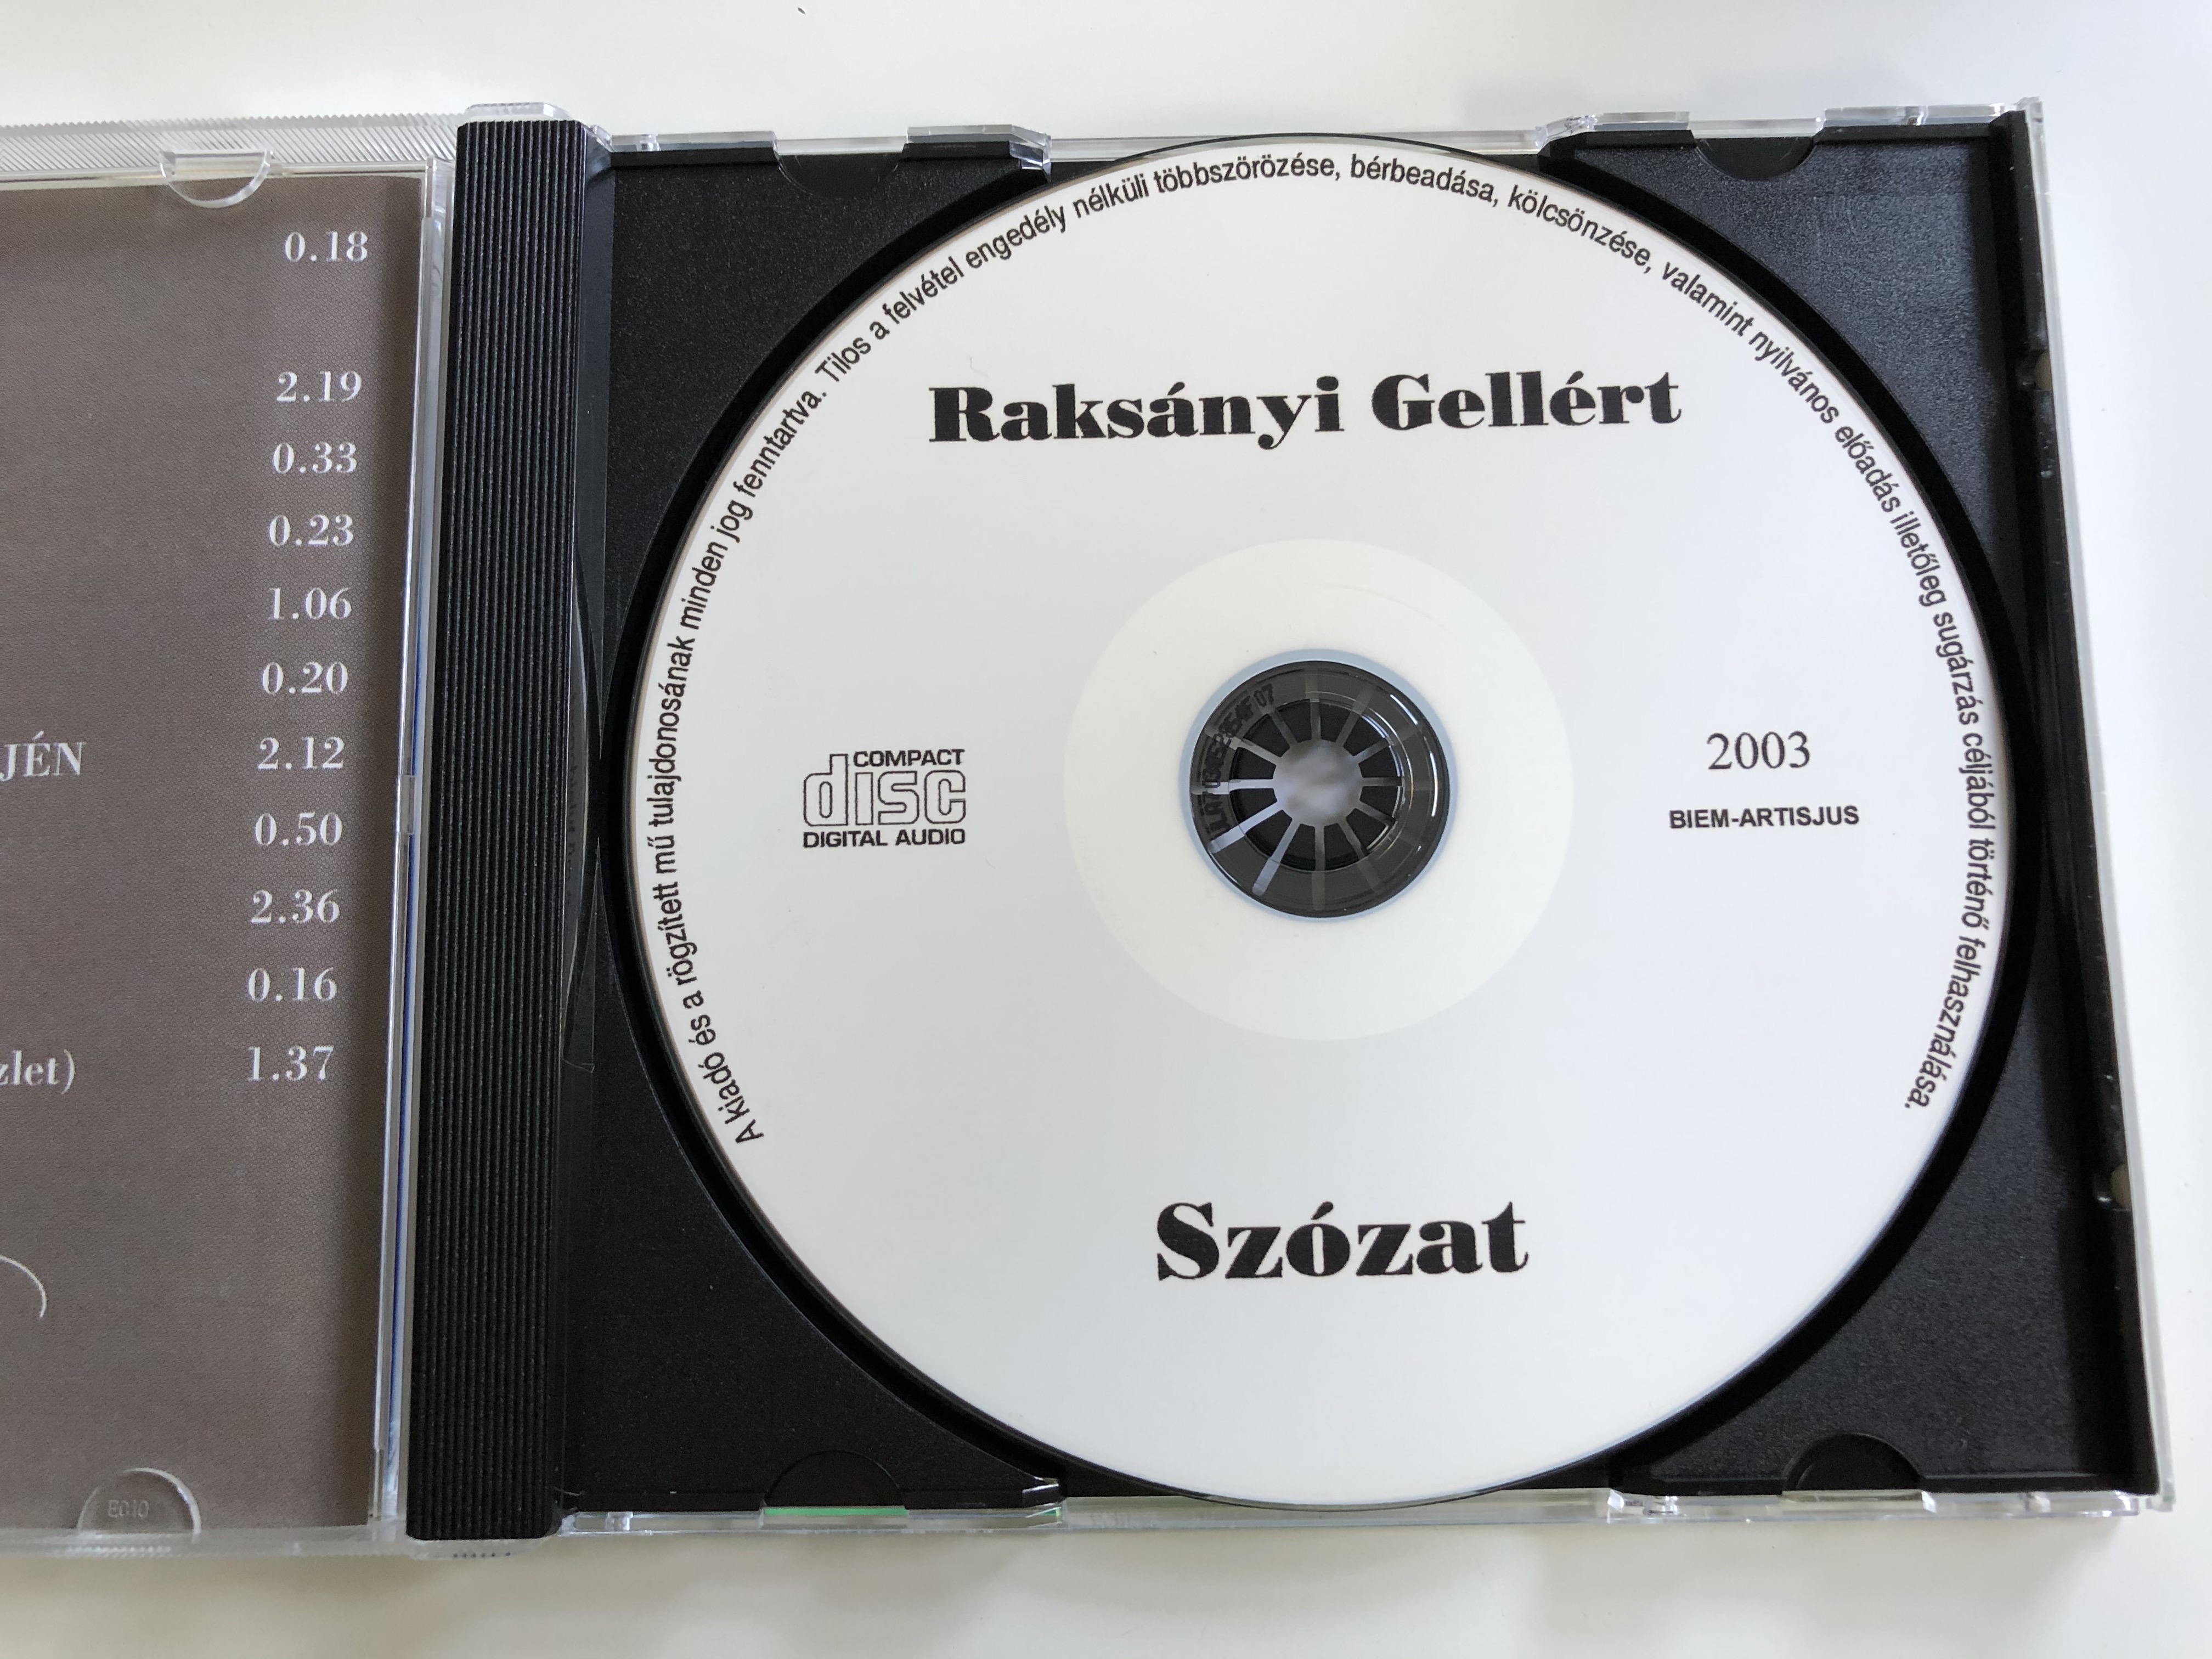 raksanyi-szozat-audio-cd-2003-4-.jpg